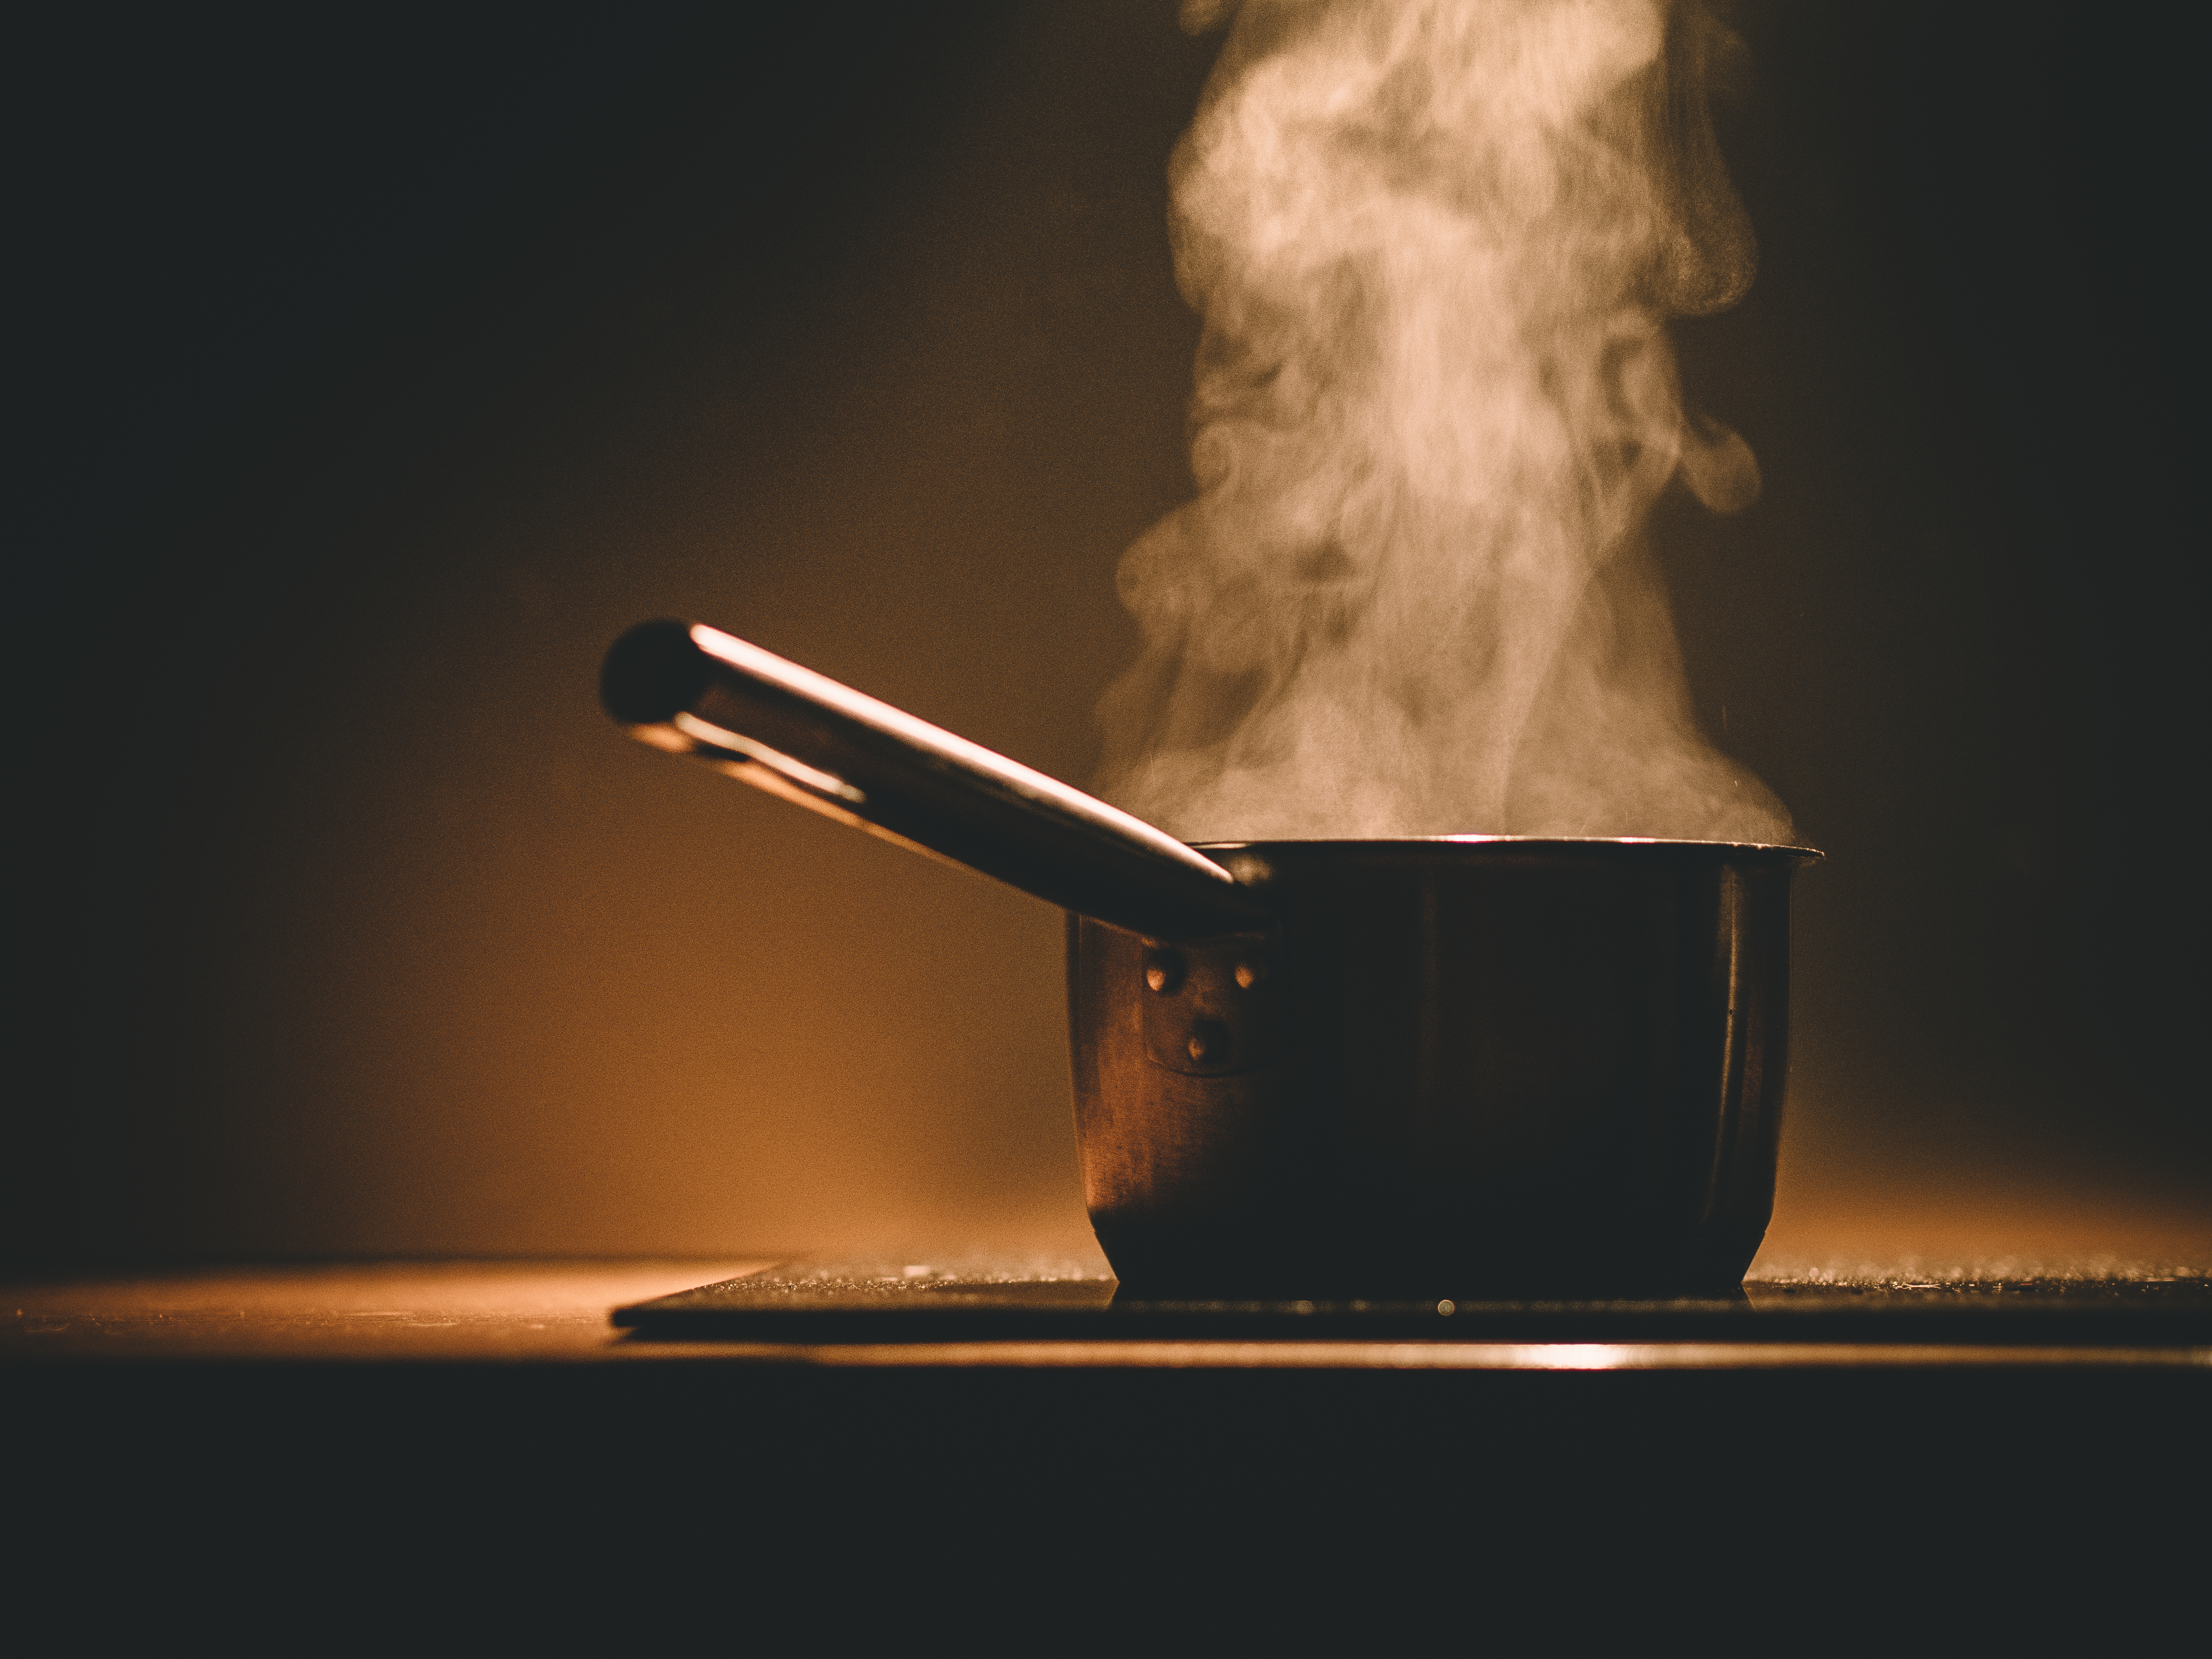 light-steam-pot-smoke-food-cooking-917756-pxhere.com-1